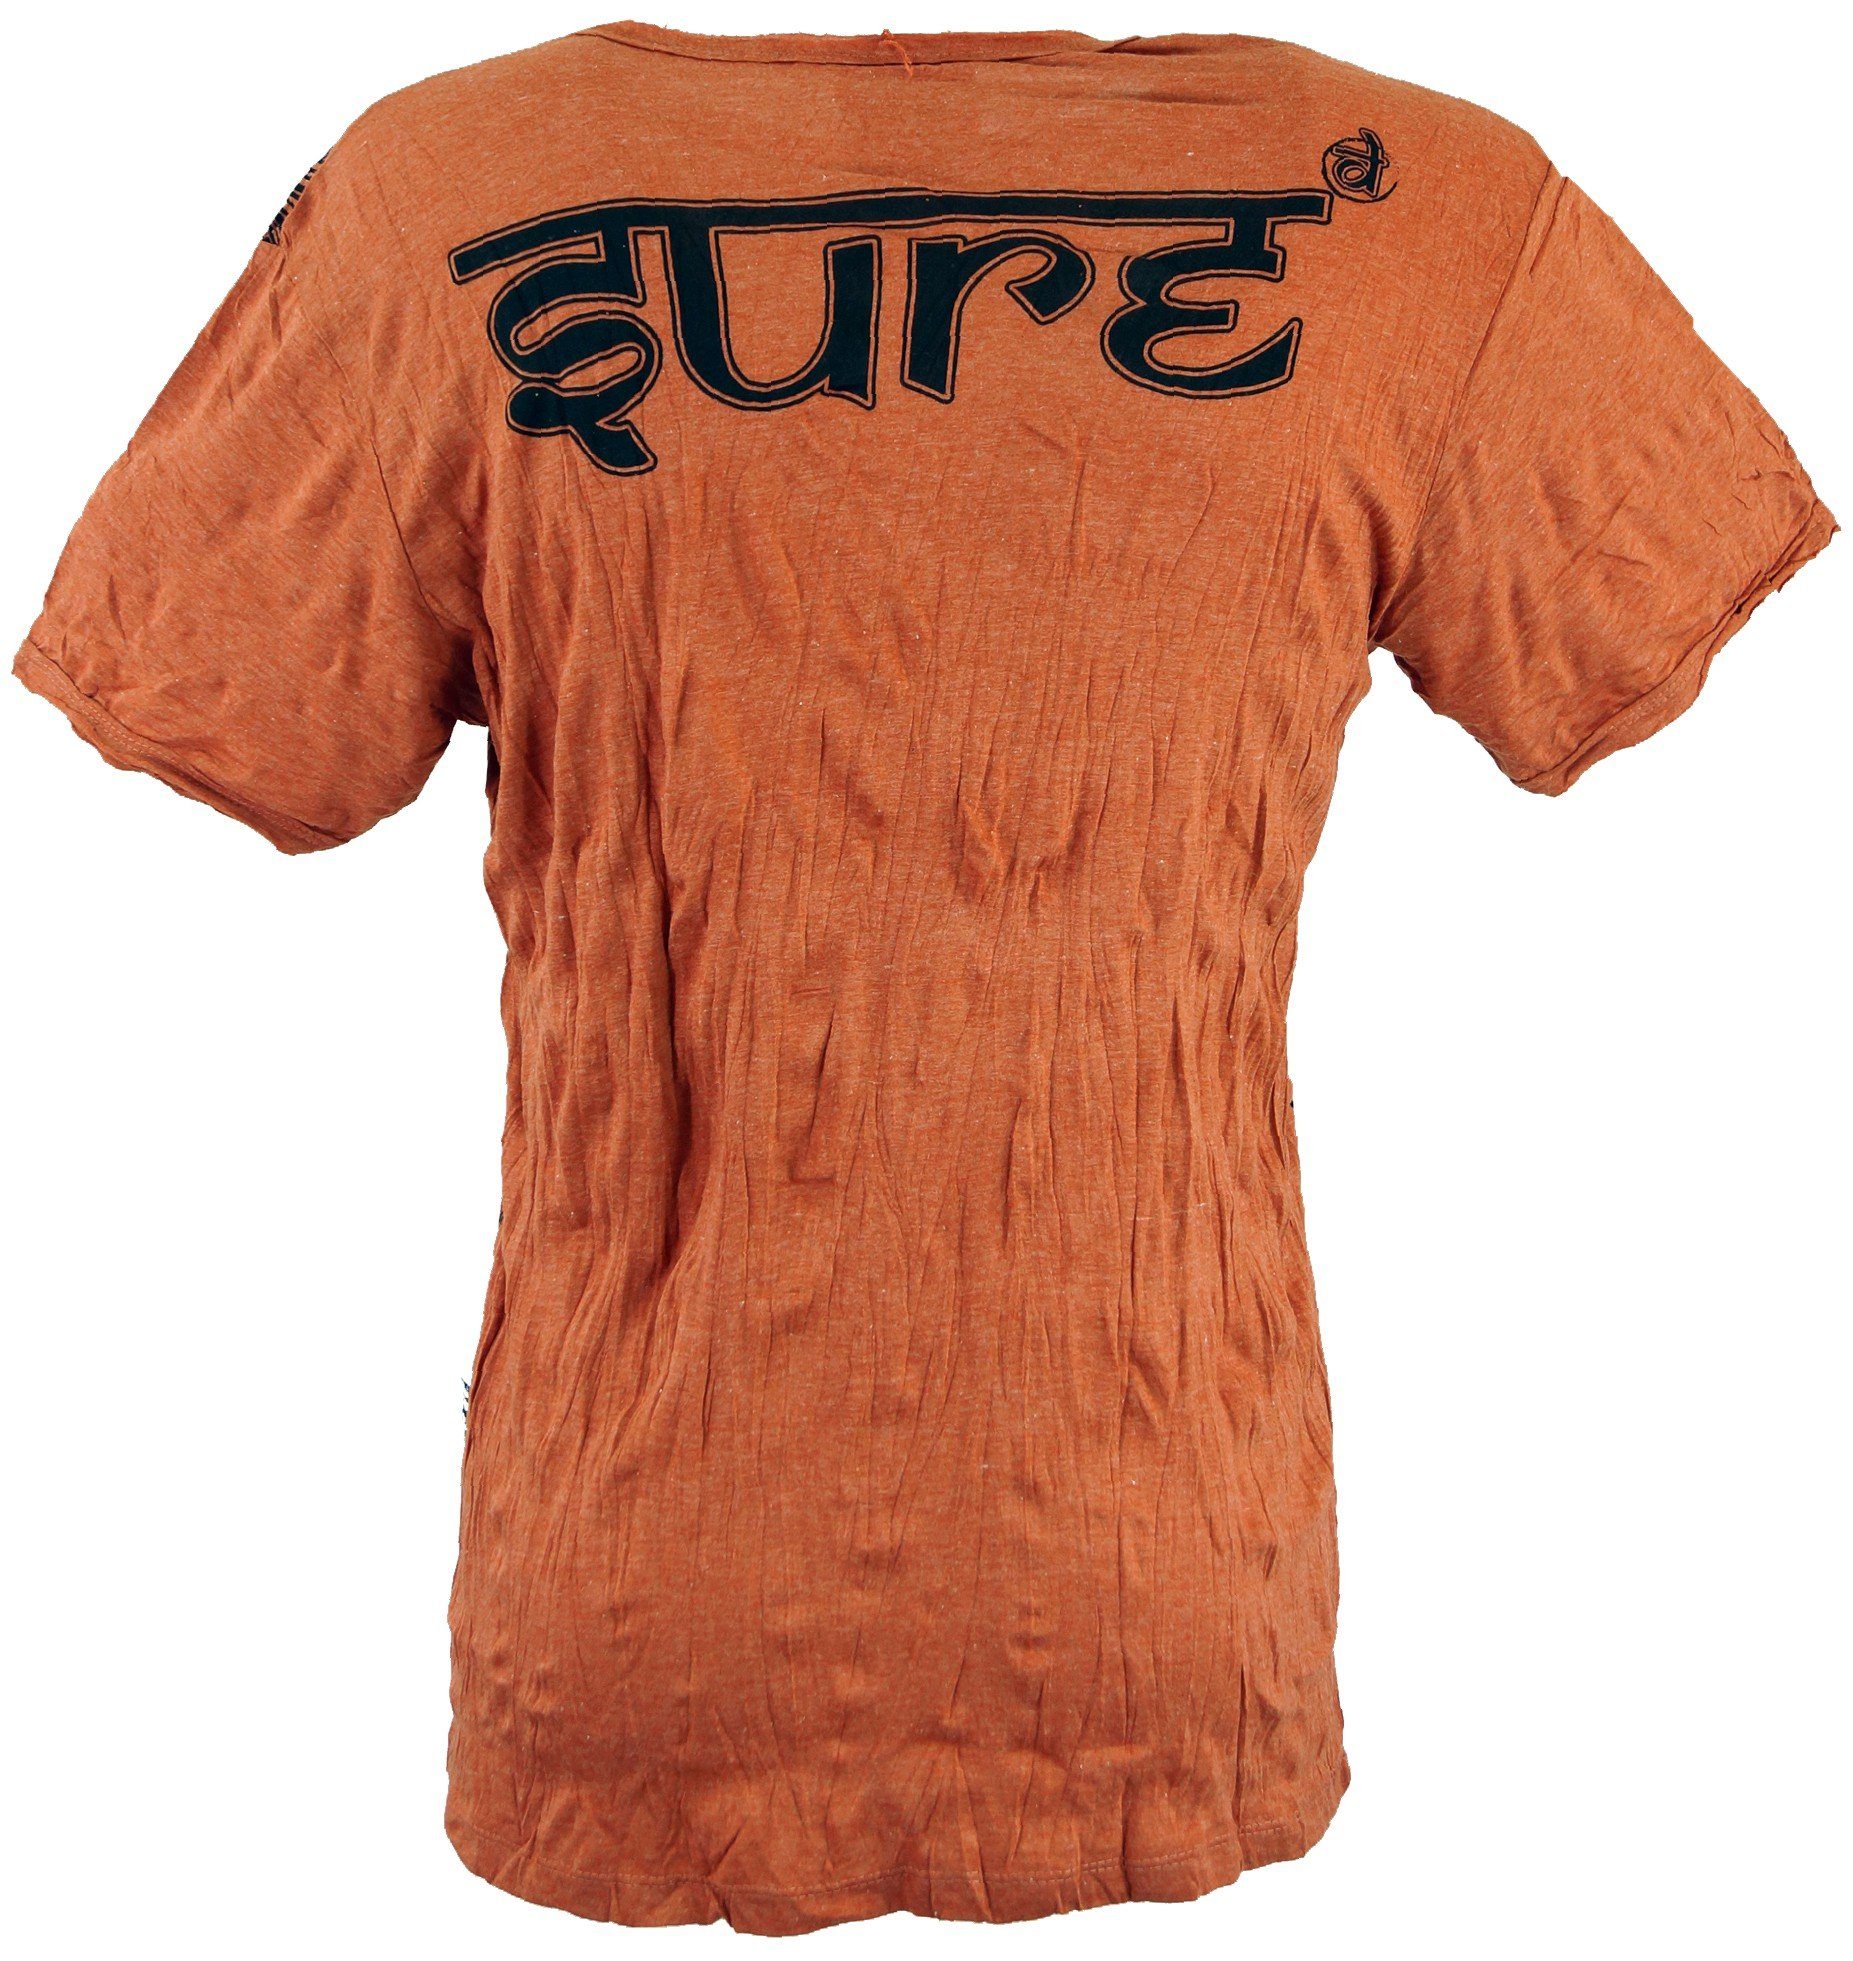 Festival, T-Shirt Ganesh - rostorange T-Shirt alternative Style, Guru-Shop Goa Bekleidung Sure